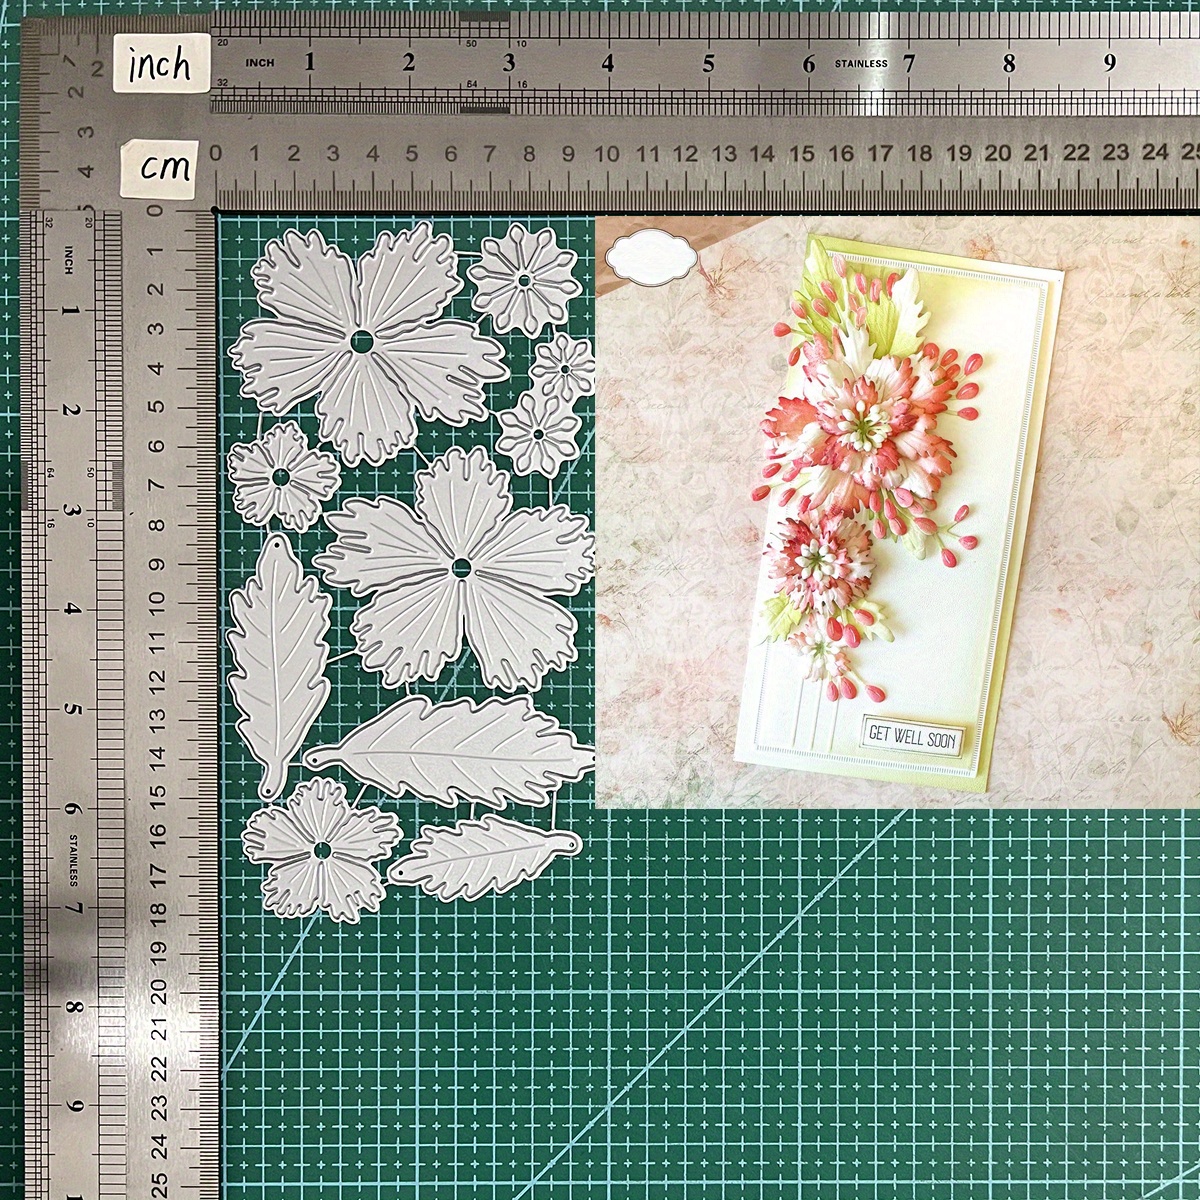 

1pc Flower Metal Die Cut, 2024 Metal Cutting Die For Paper Card Making Scrapbooking Diy Cards Photo Album Craft Decorations